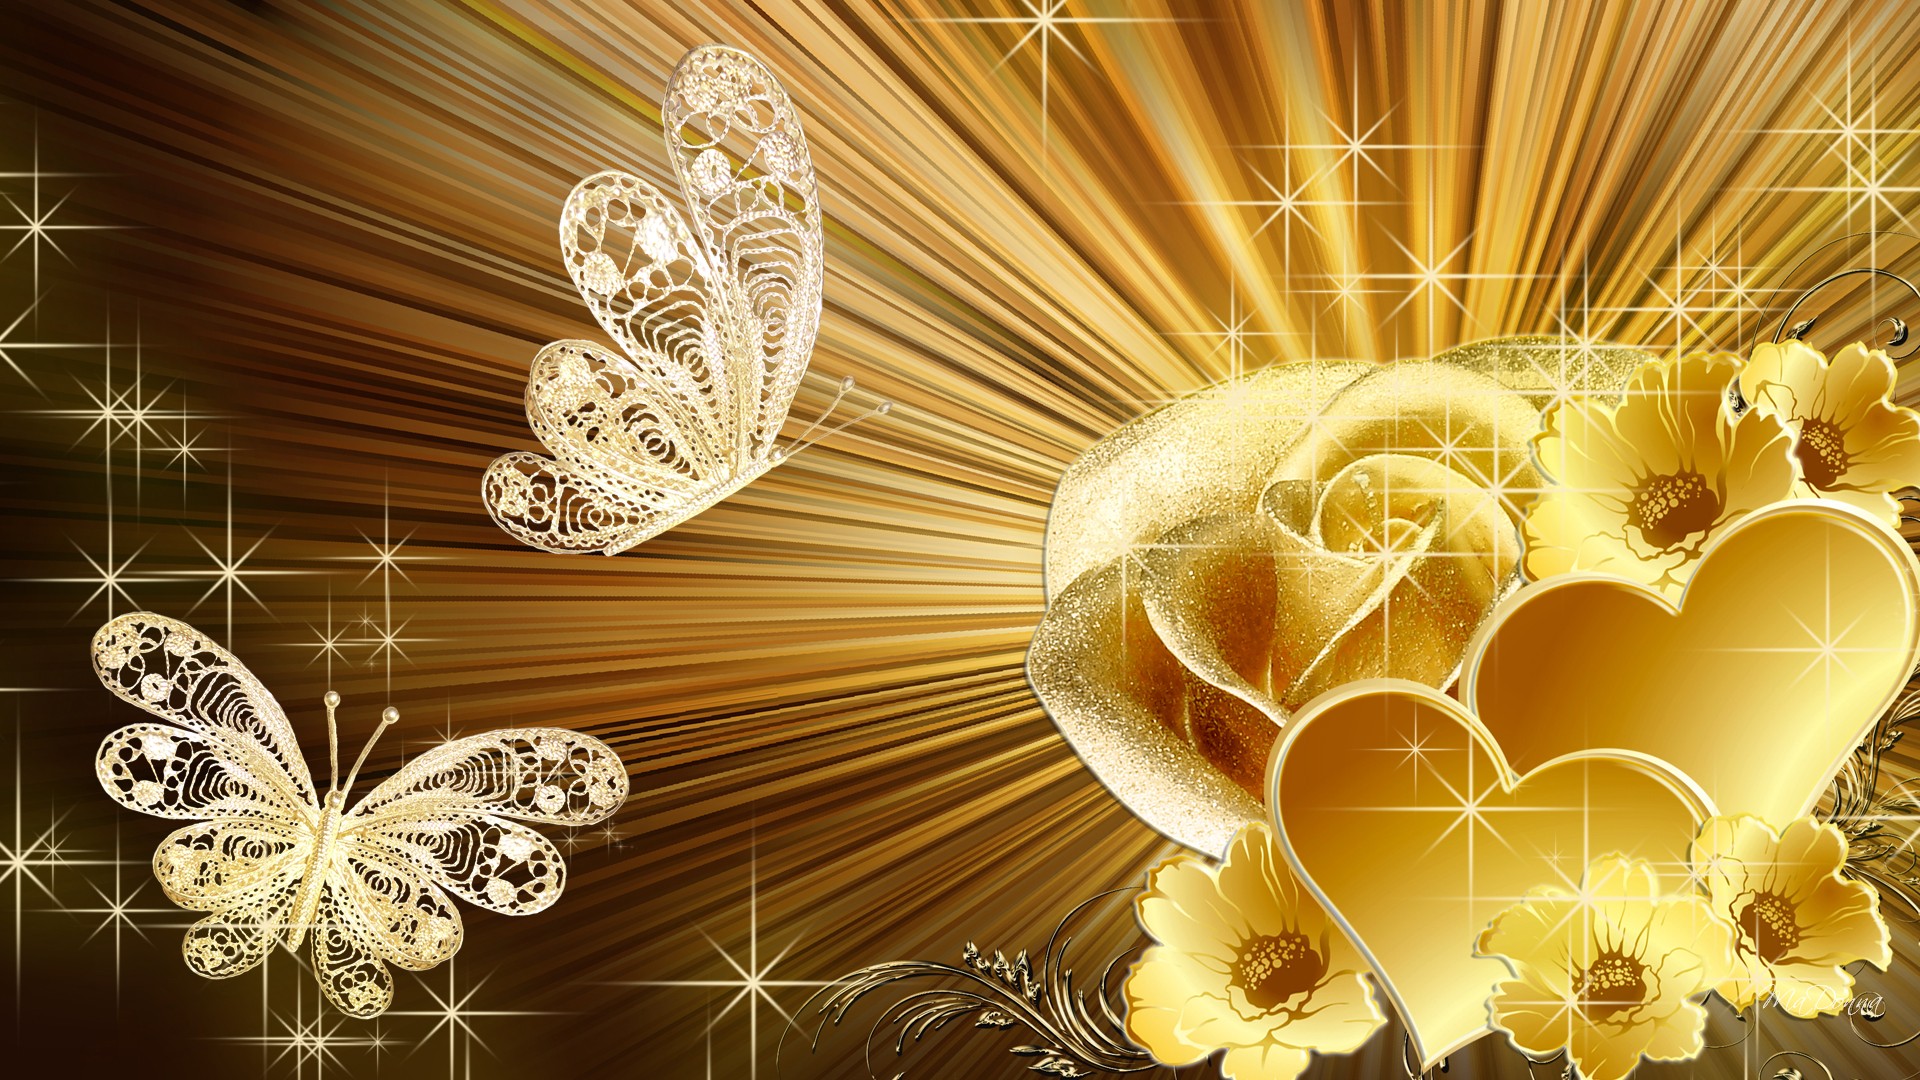 Golden Rose HD Desktop Background wallpaper free